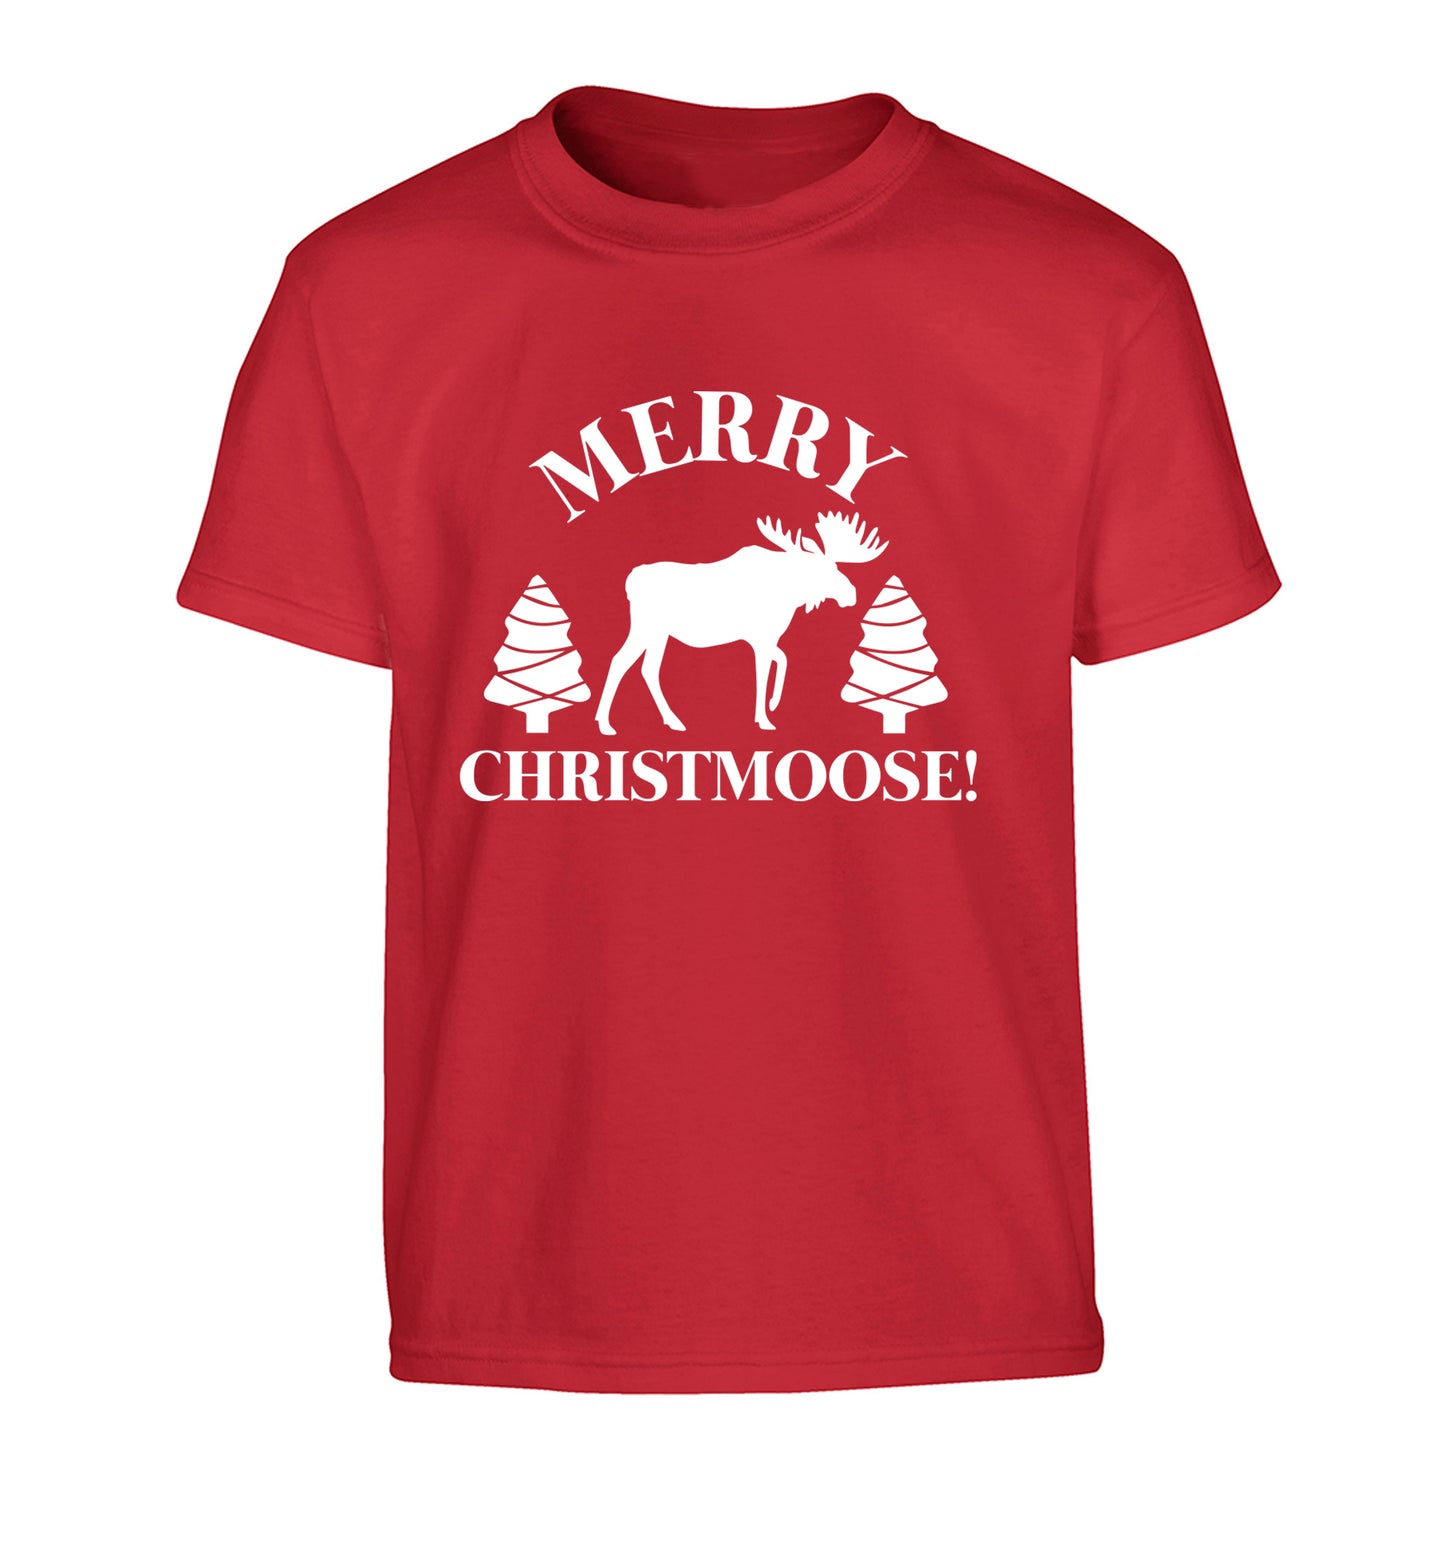 Merry Christmoose Children's red Tshirt 12-14 Years